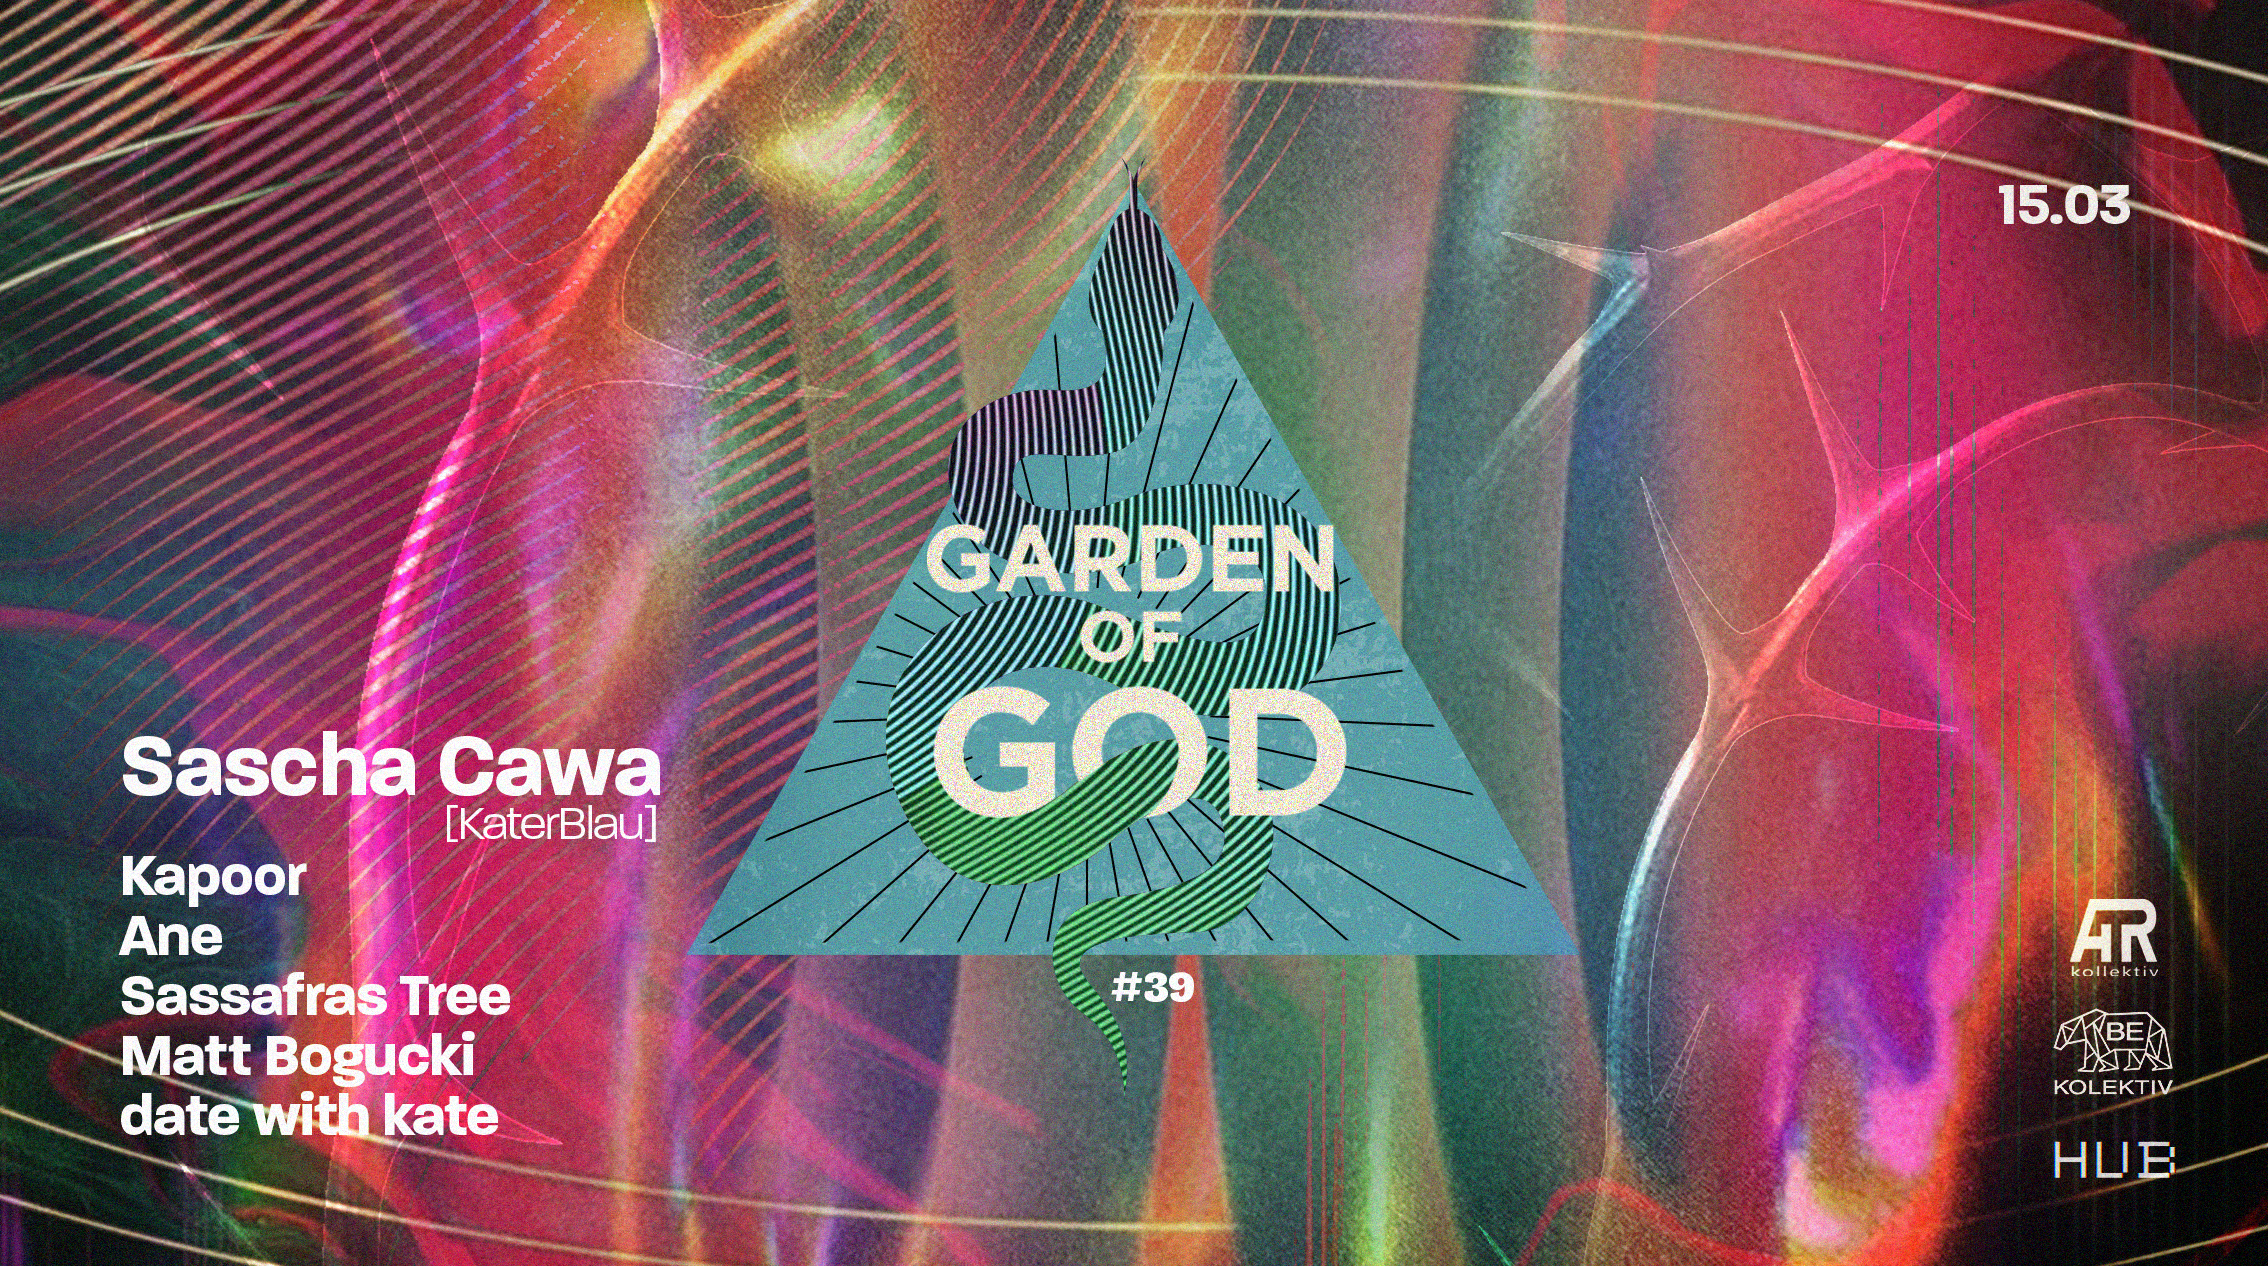 Garden of God #39: Sascha Cawa (KaterBlau) - フライヤー表